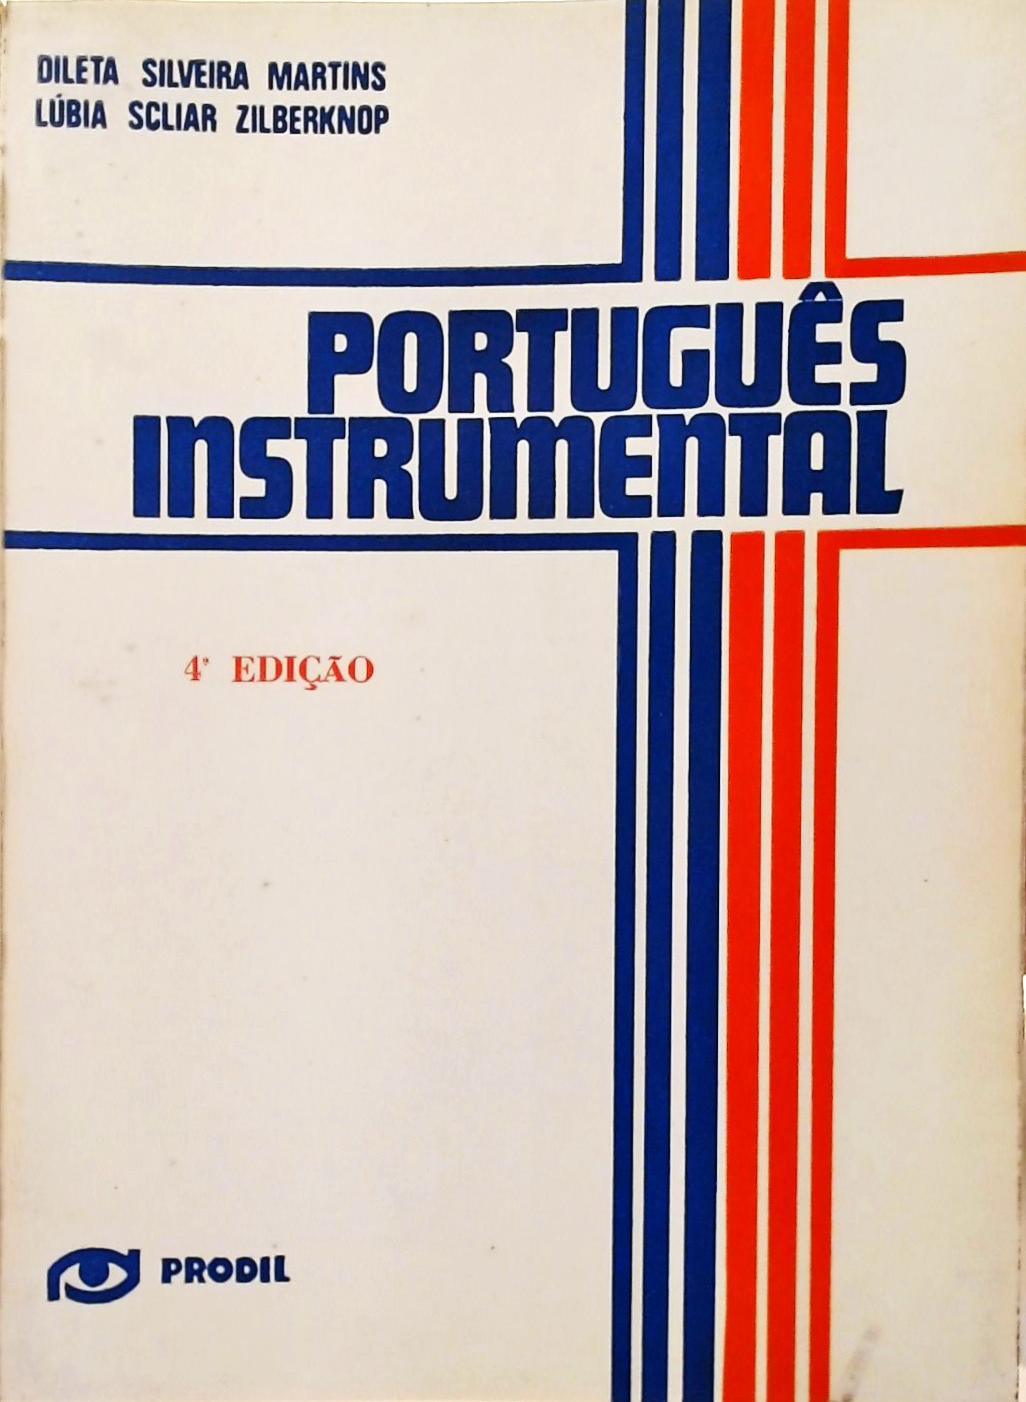 Português Instrumental (1989)